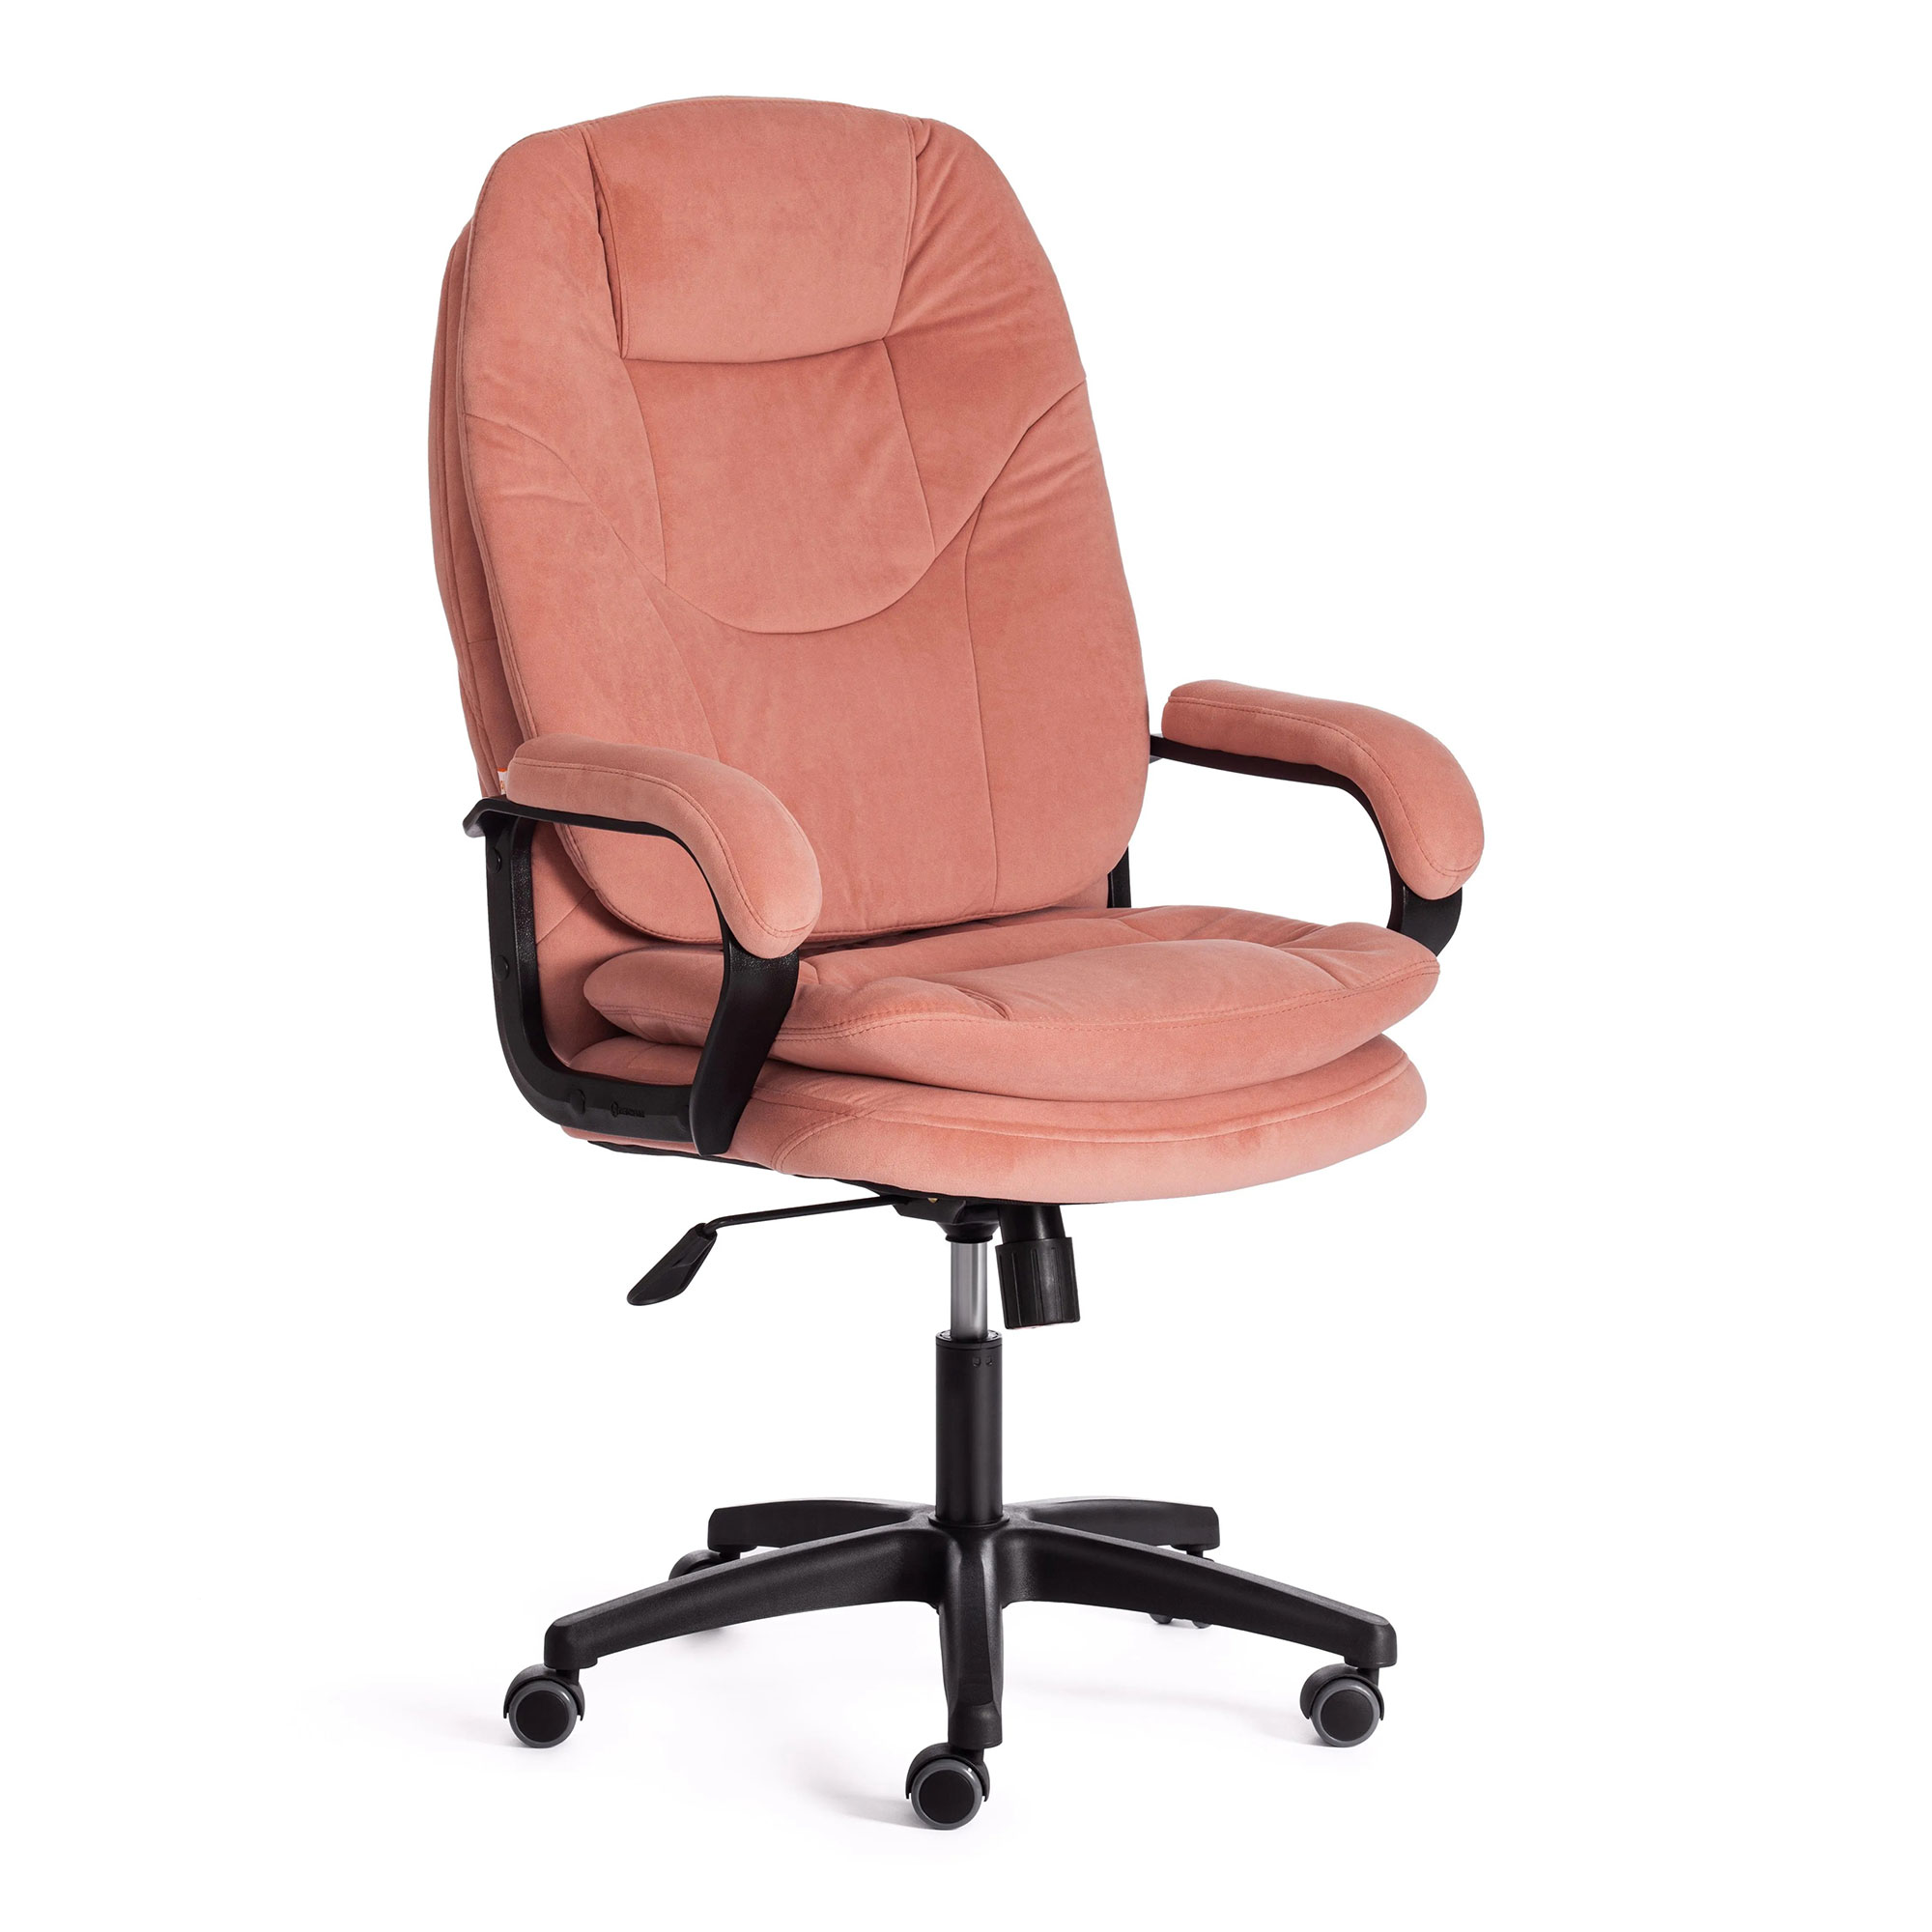 Компьютерное кресло TC Comfort розовое 66х46х133 см (19385) компьютерное кресло tc comfort бежевое 66х46х133 см 19378